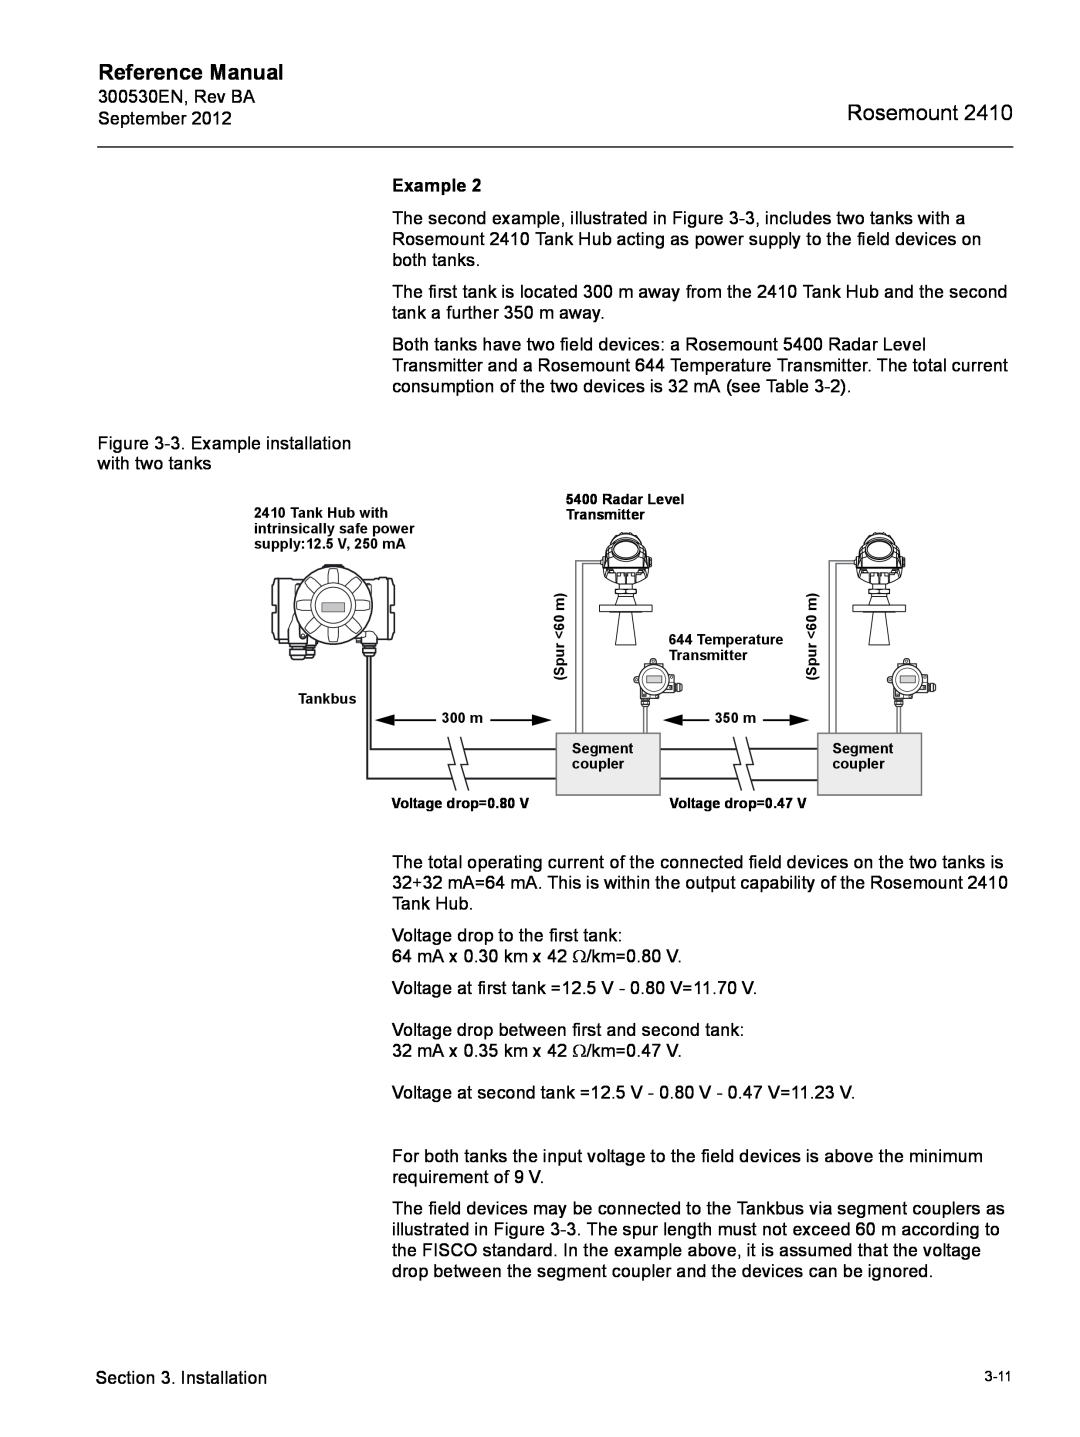 Emerson Process Management Rosemount 2410 manual Reference Manual, Example, Radar Level, Segment 